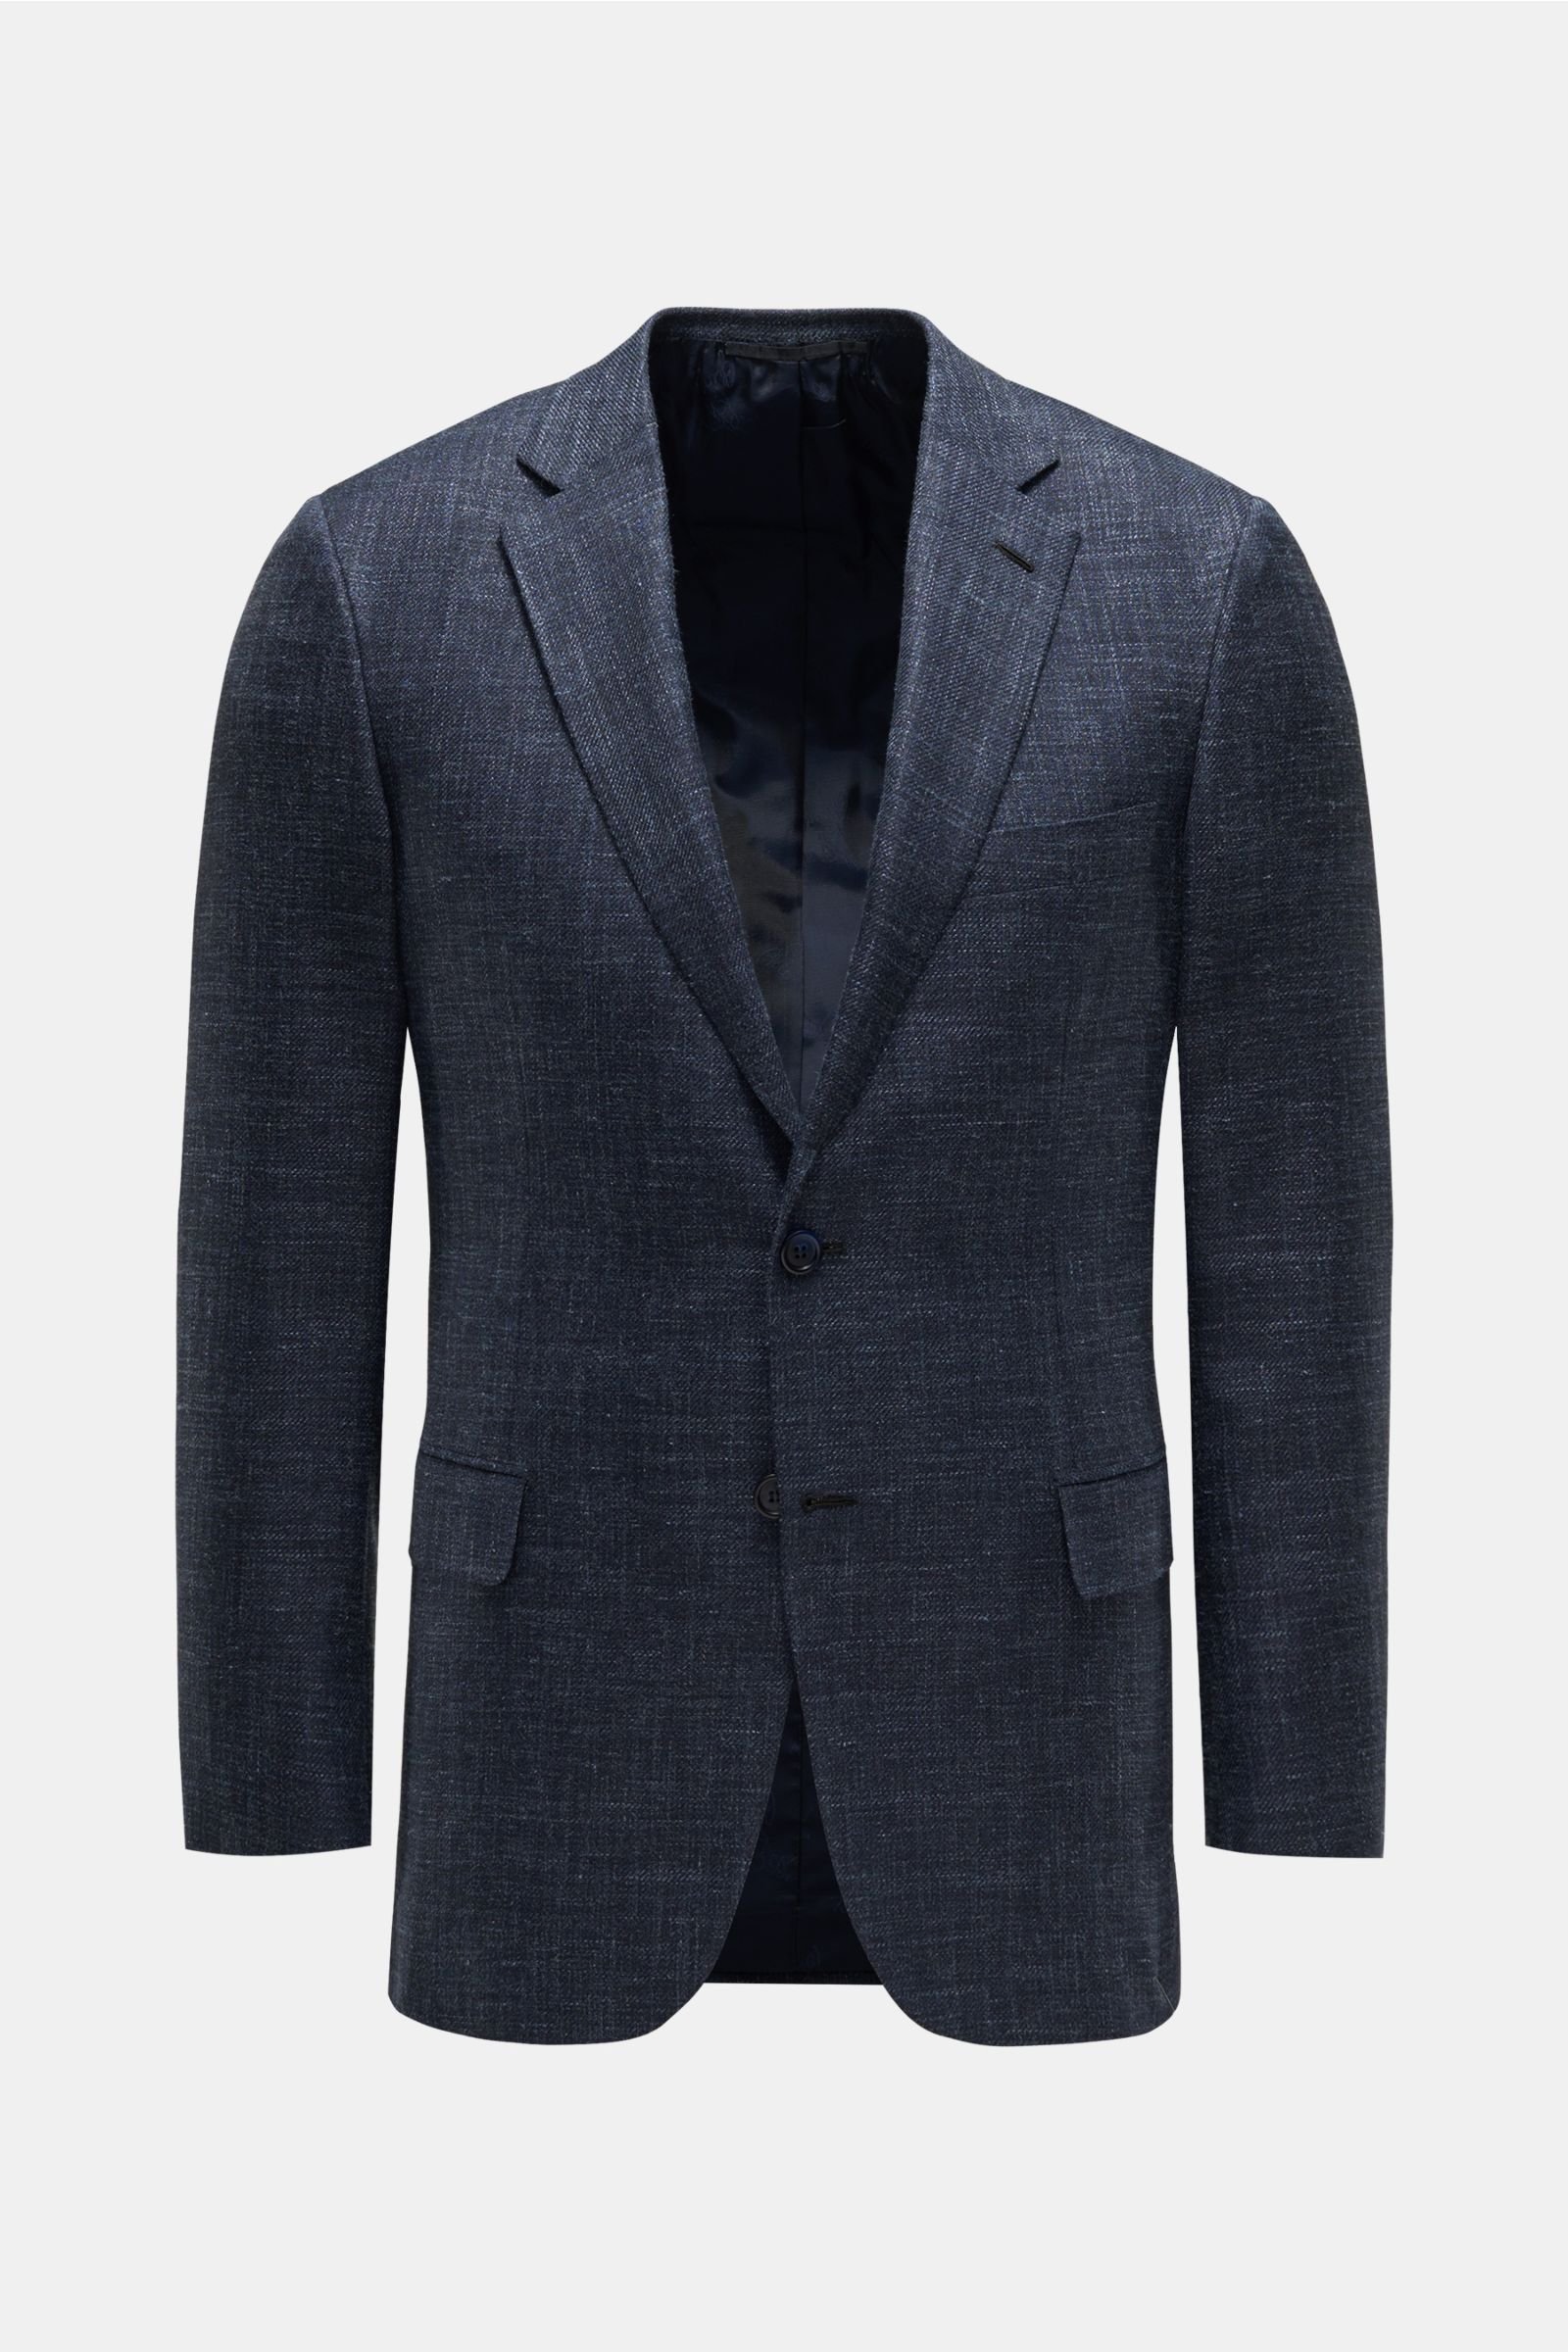 Smart-casual jacket 'Brunico' grey-blue